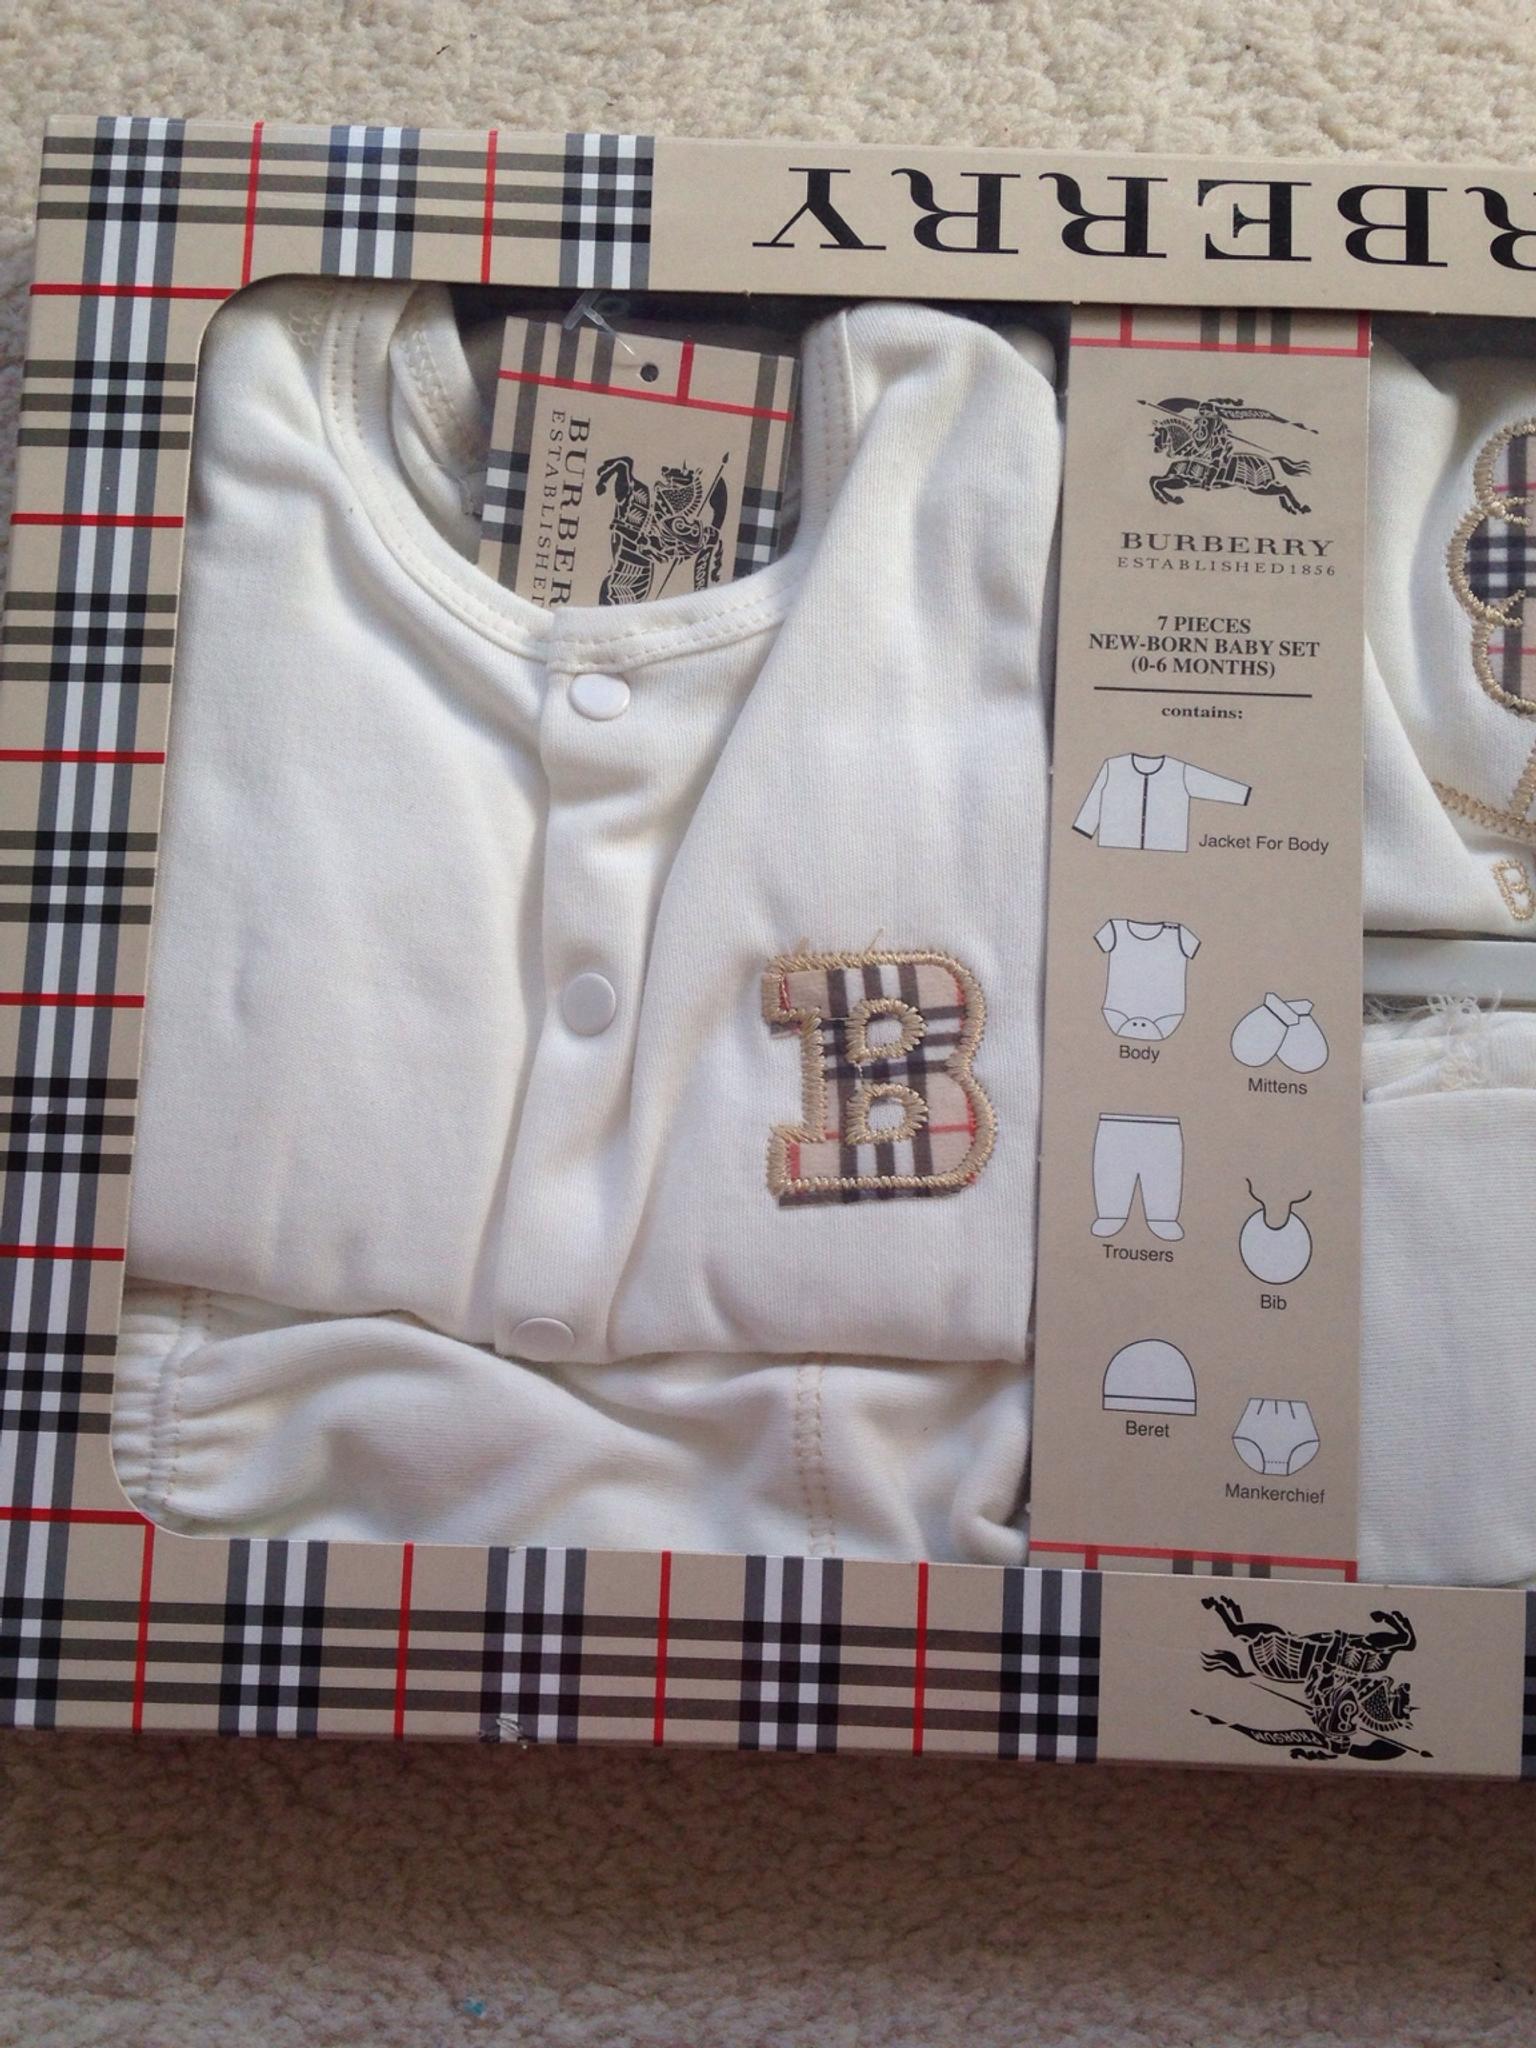 burberry newborn baby set